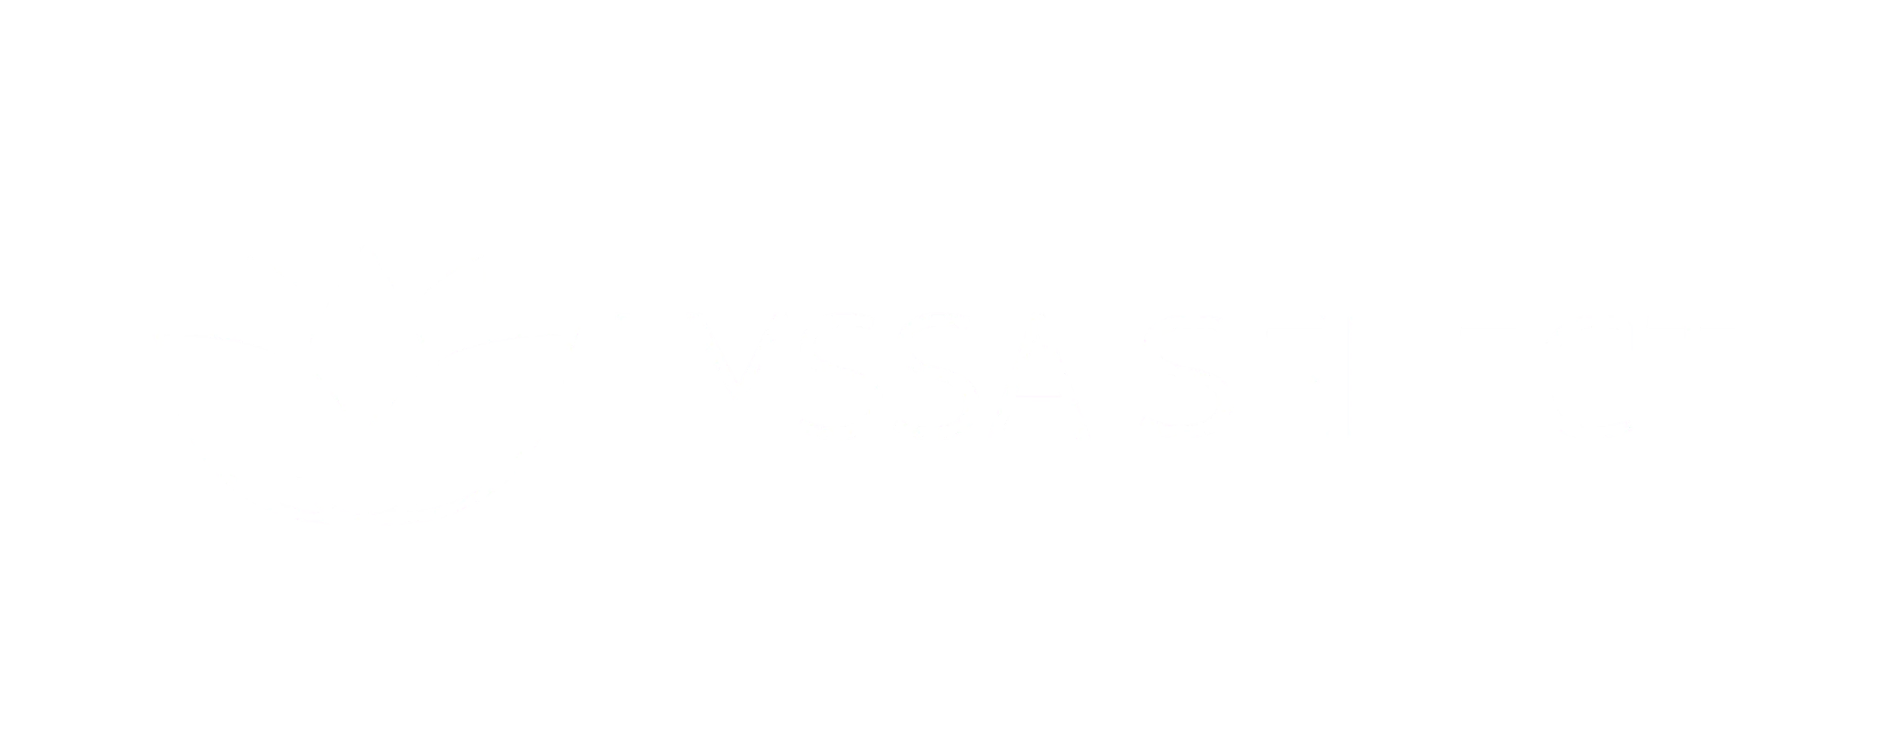 Logo Lyssaselect